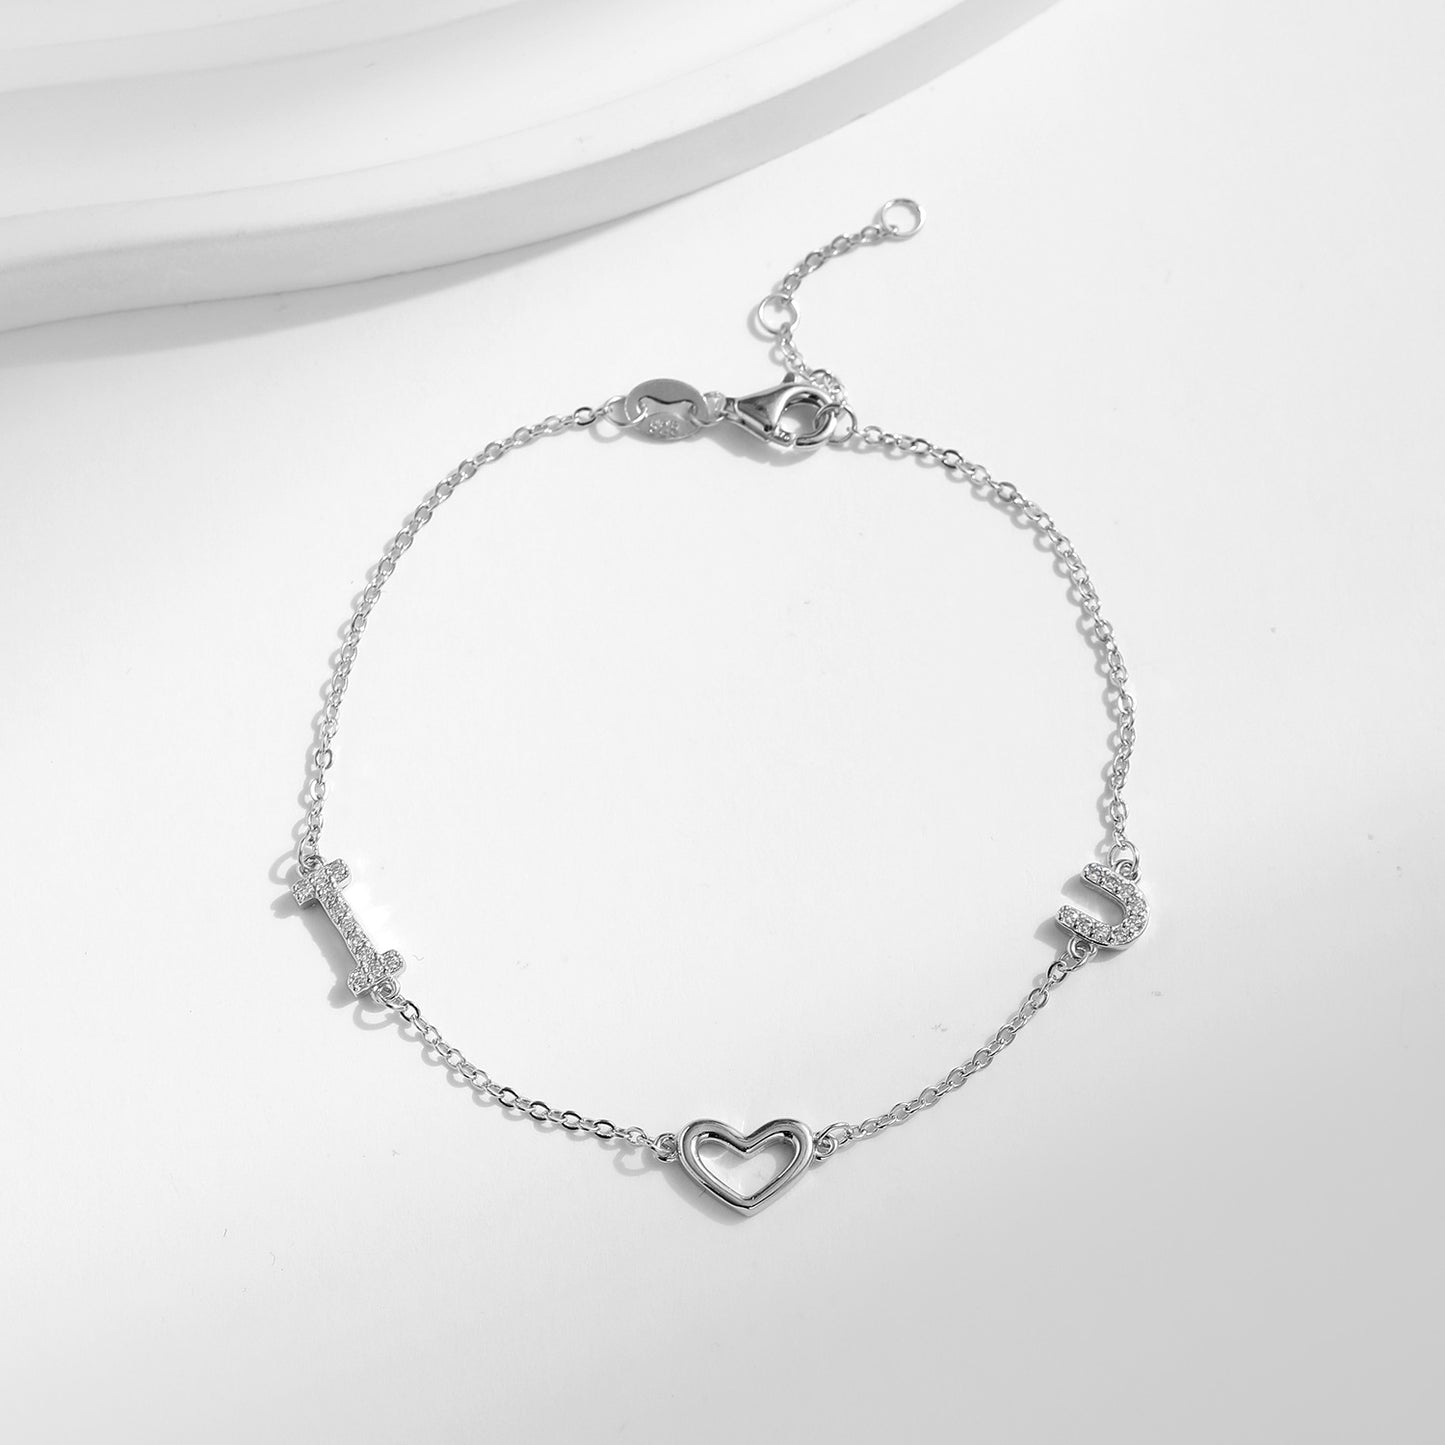 Romantic English Letter Love Sterling Silver Bracelet